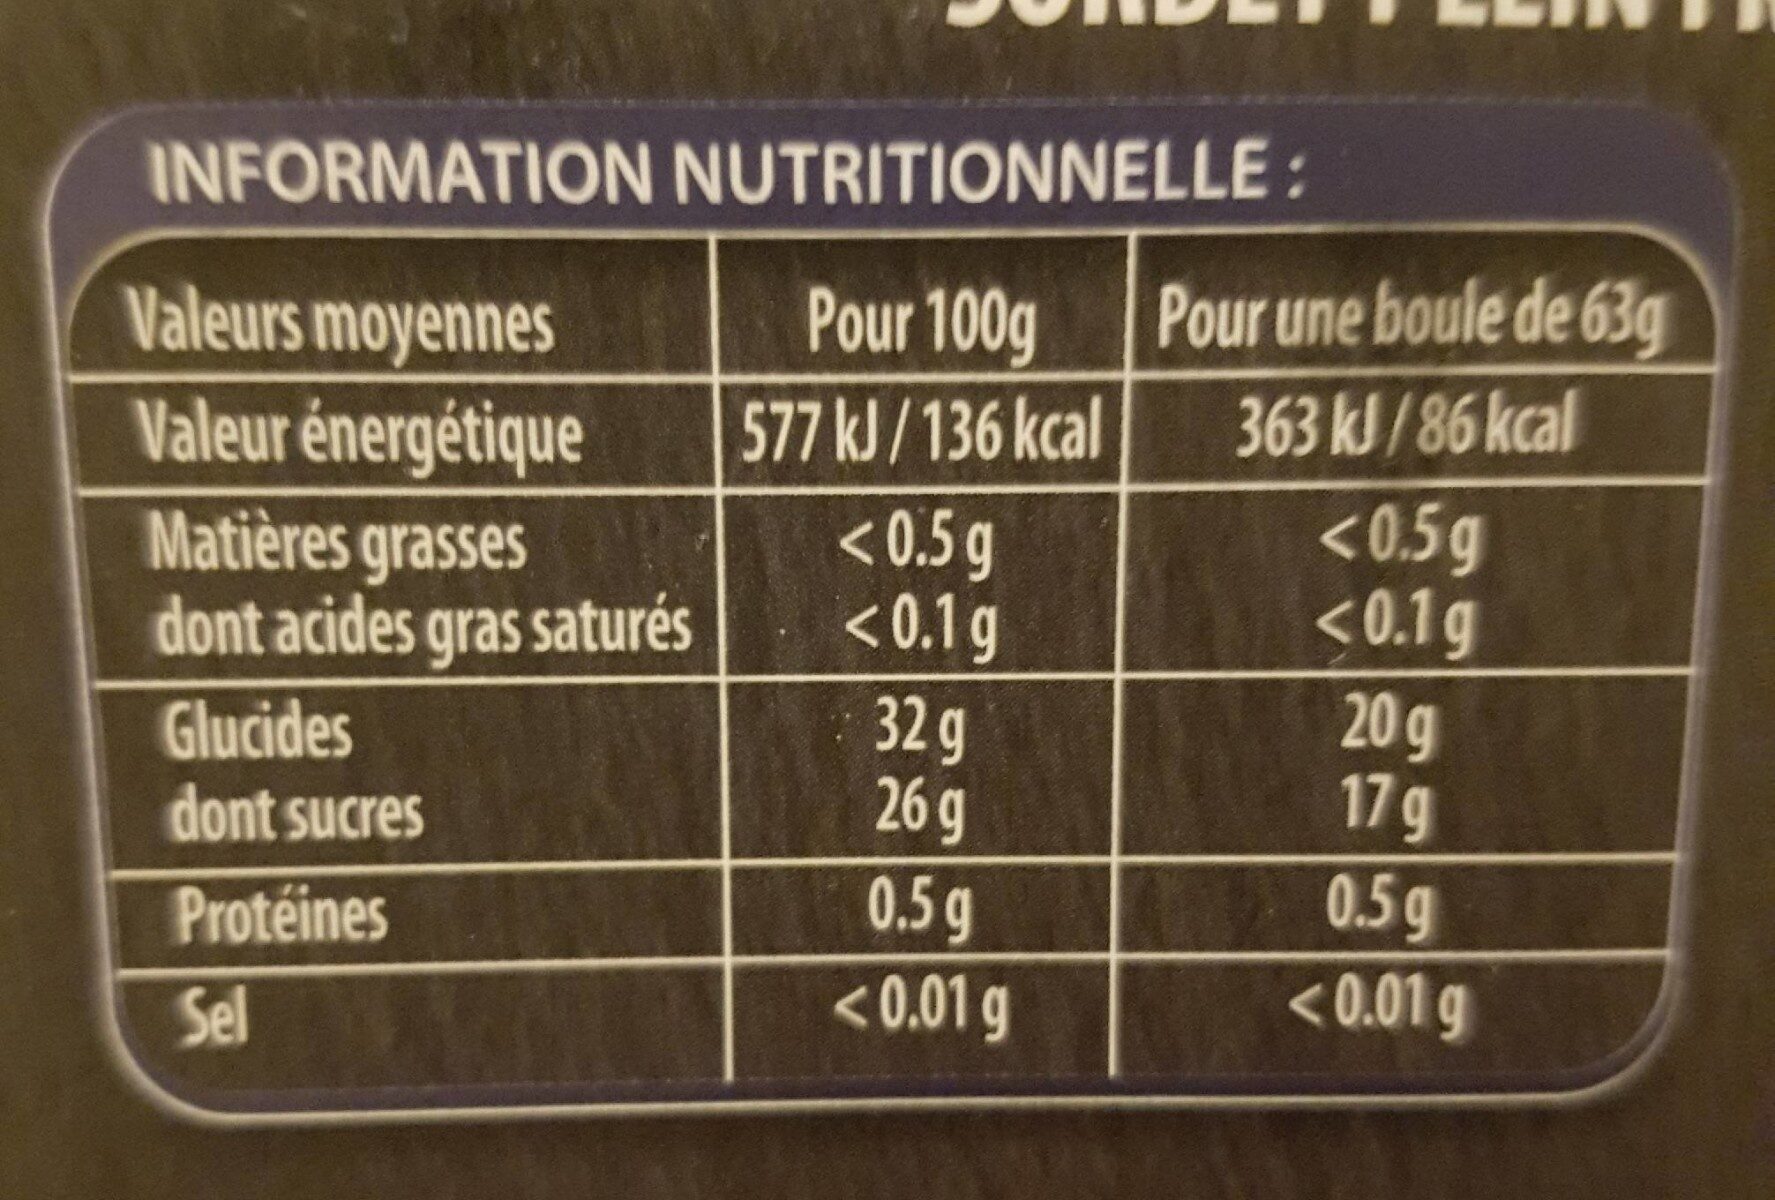 Sorbet plein fruit Fraise - Nutrition facts - fr